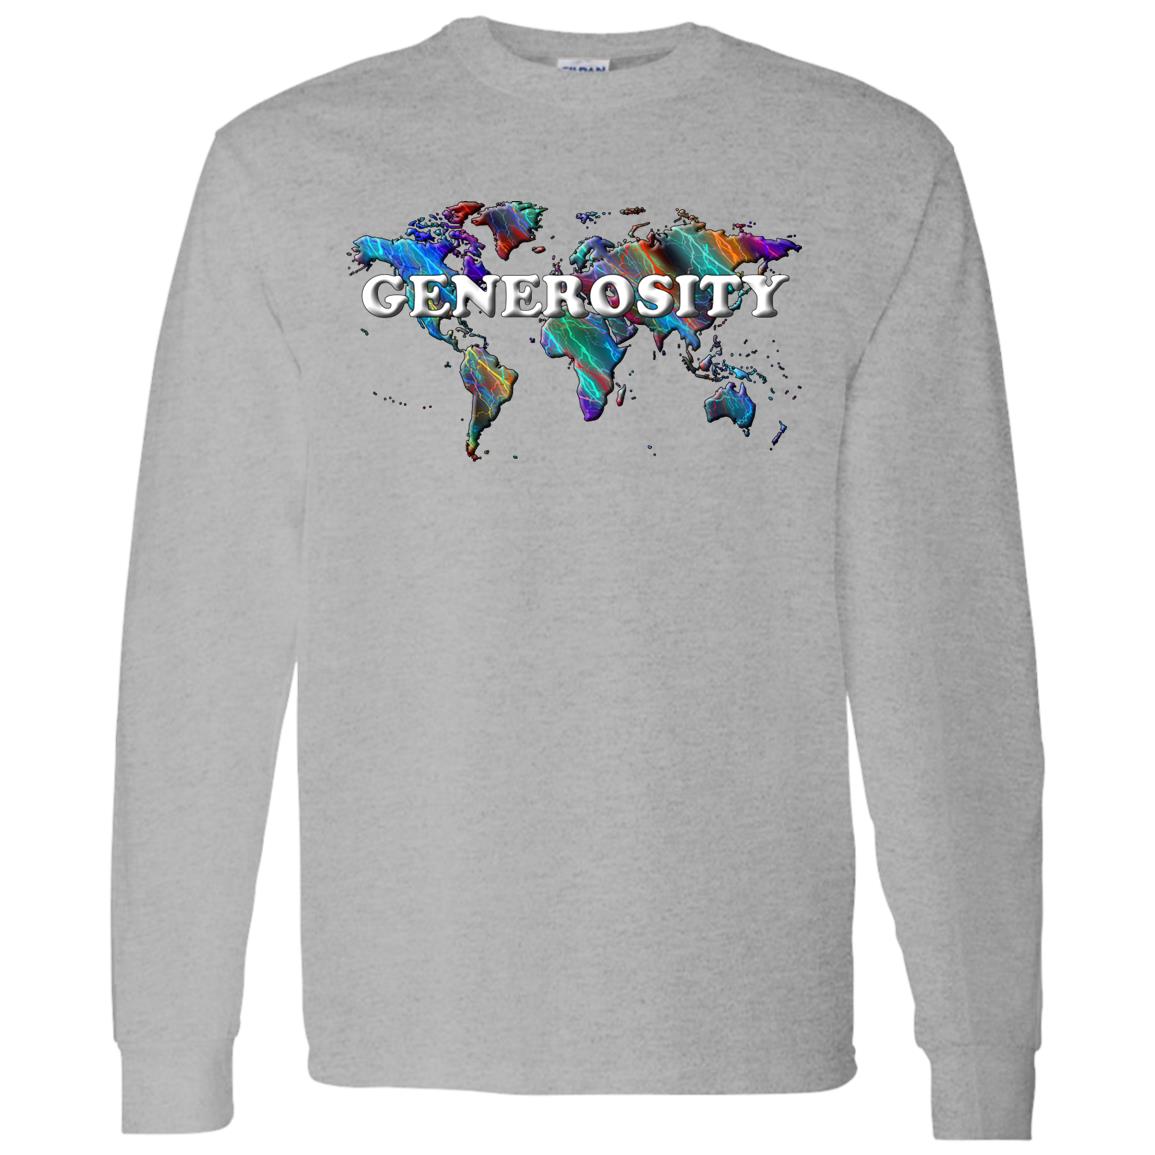 Generosity Long Sleeve T-Shirt